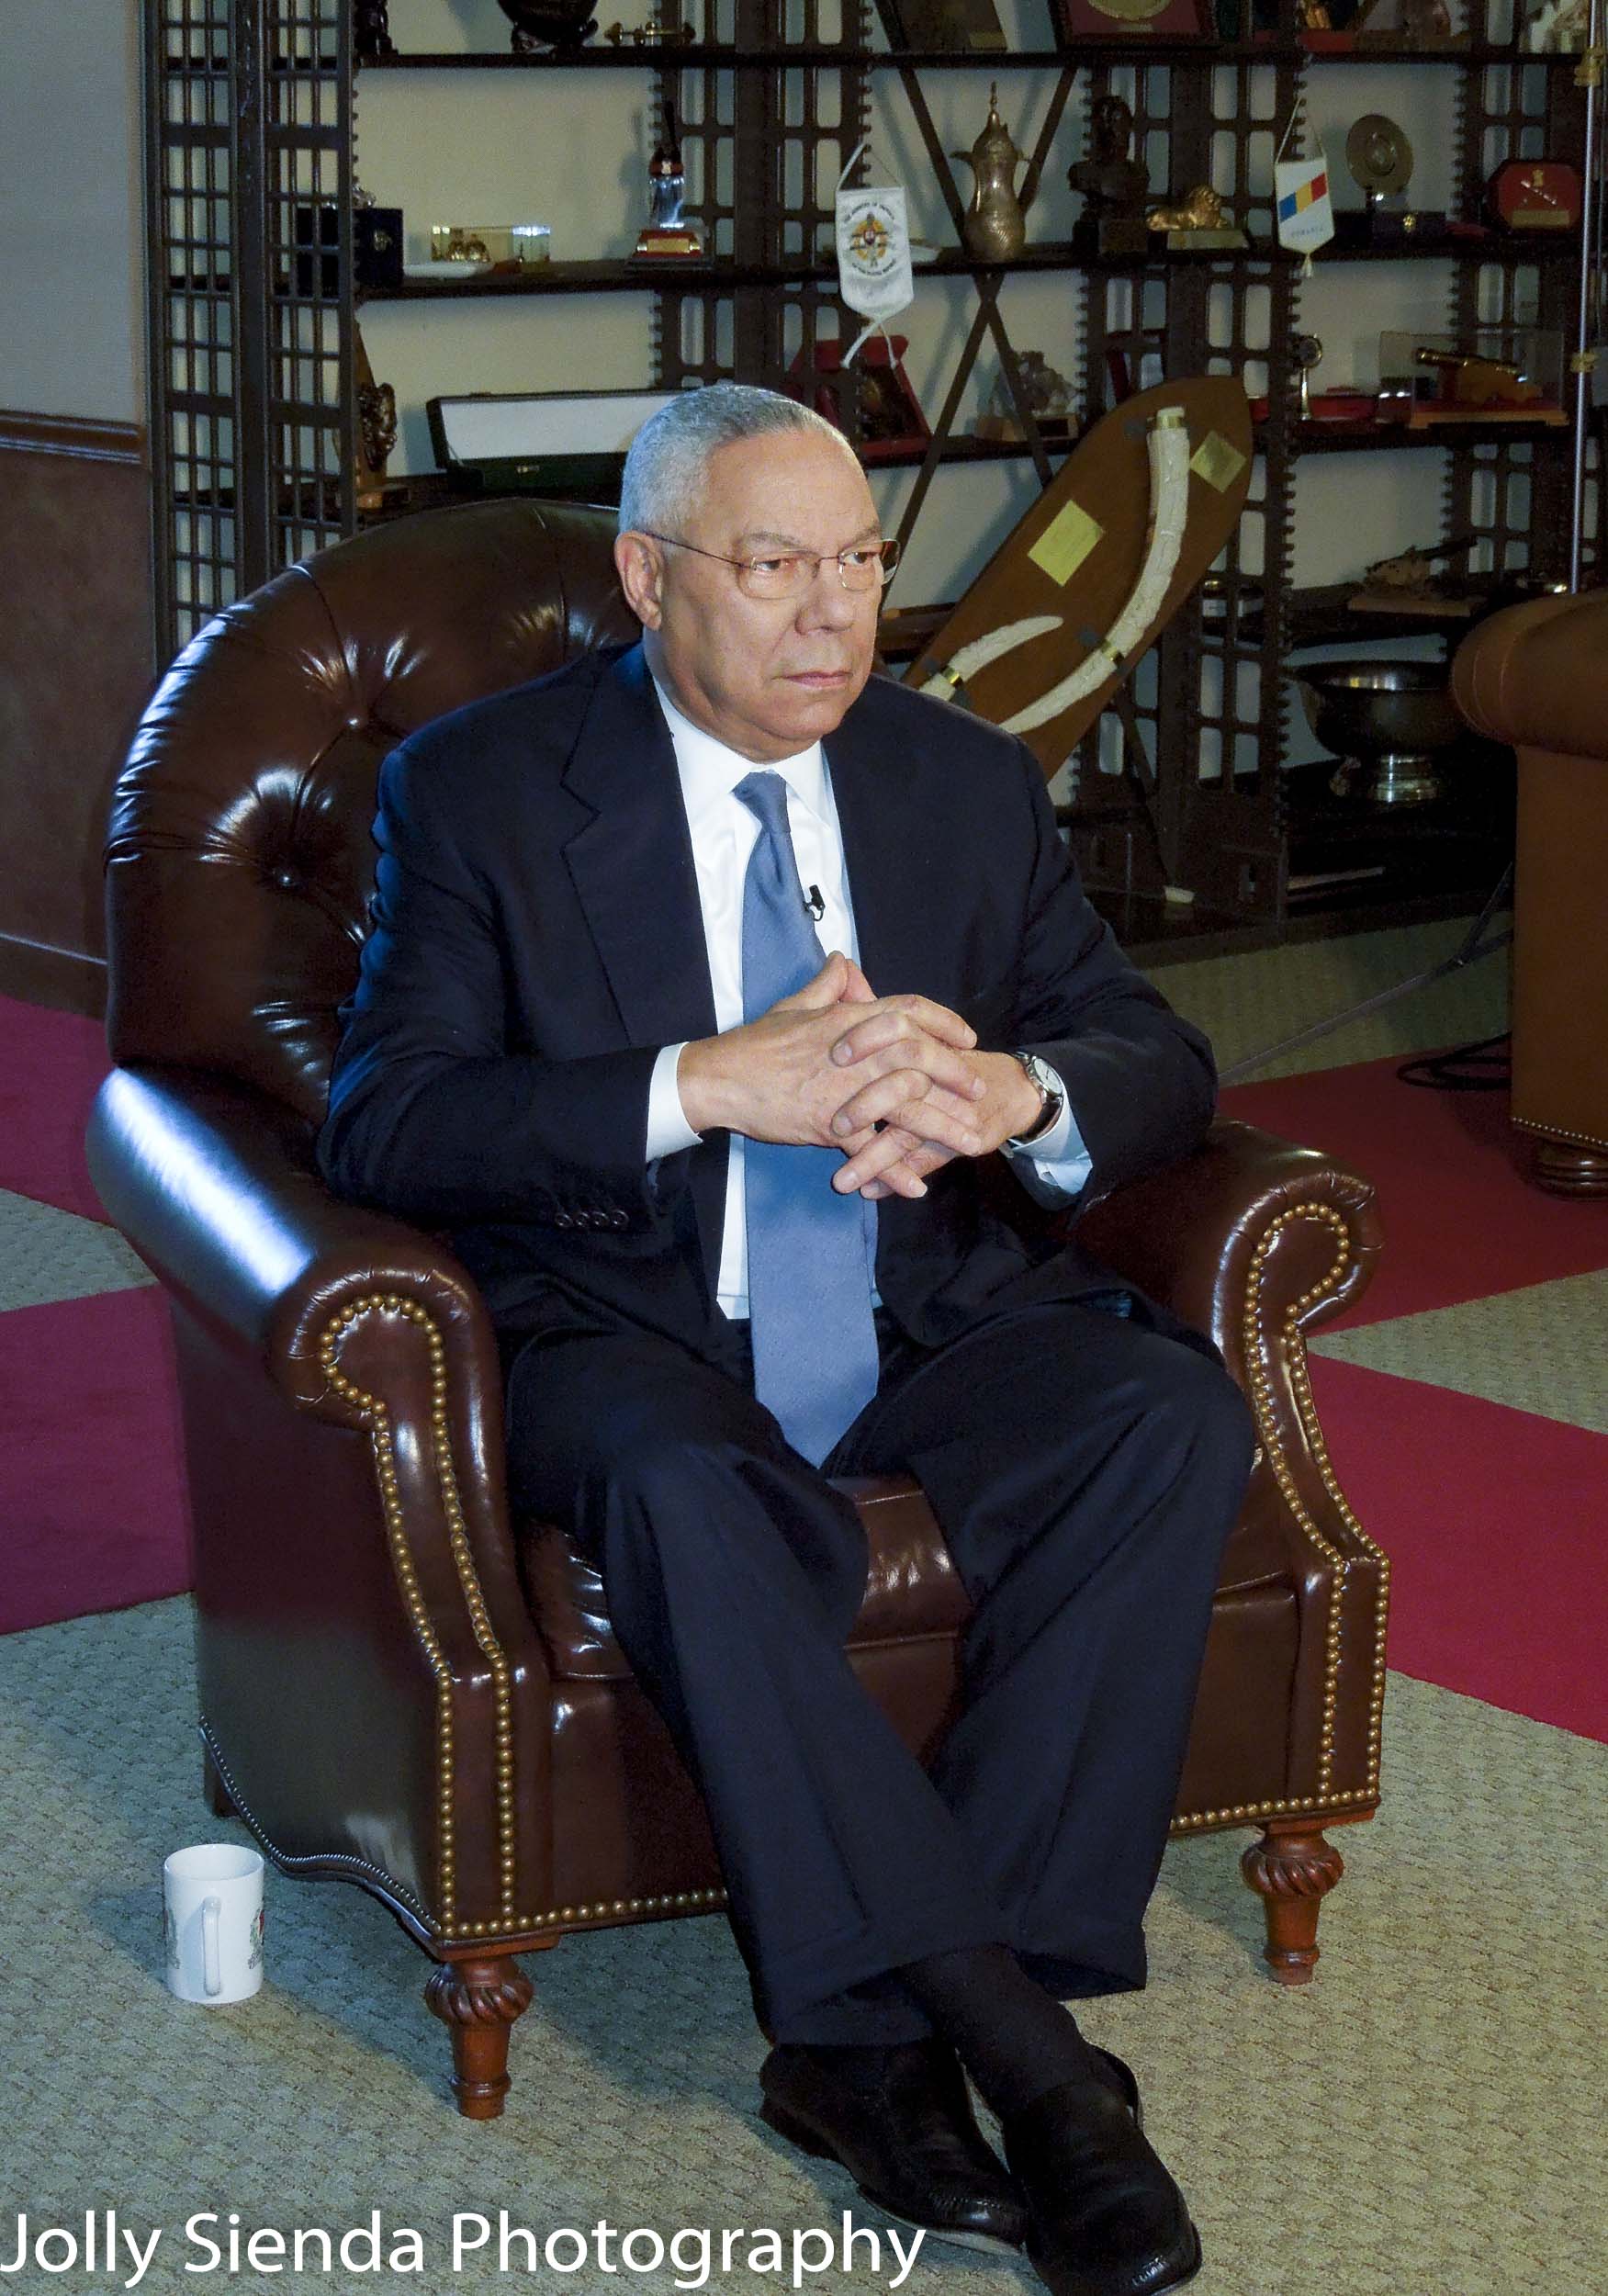 Colin Powell, (Ret) U.S. Secretary of State, four-star general U